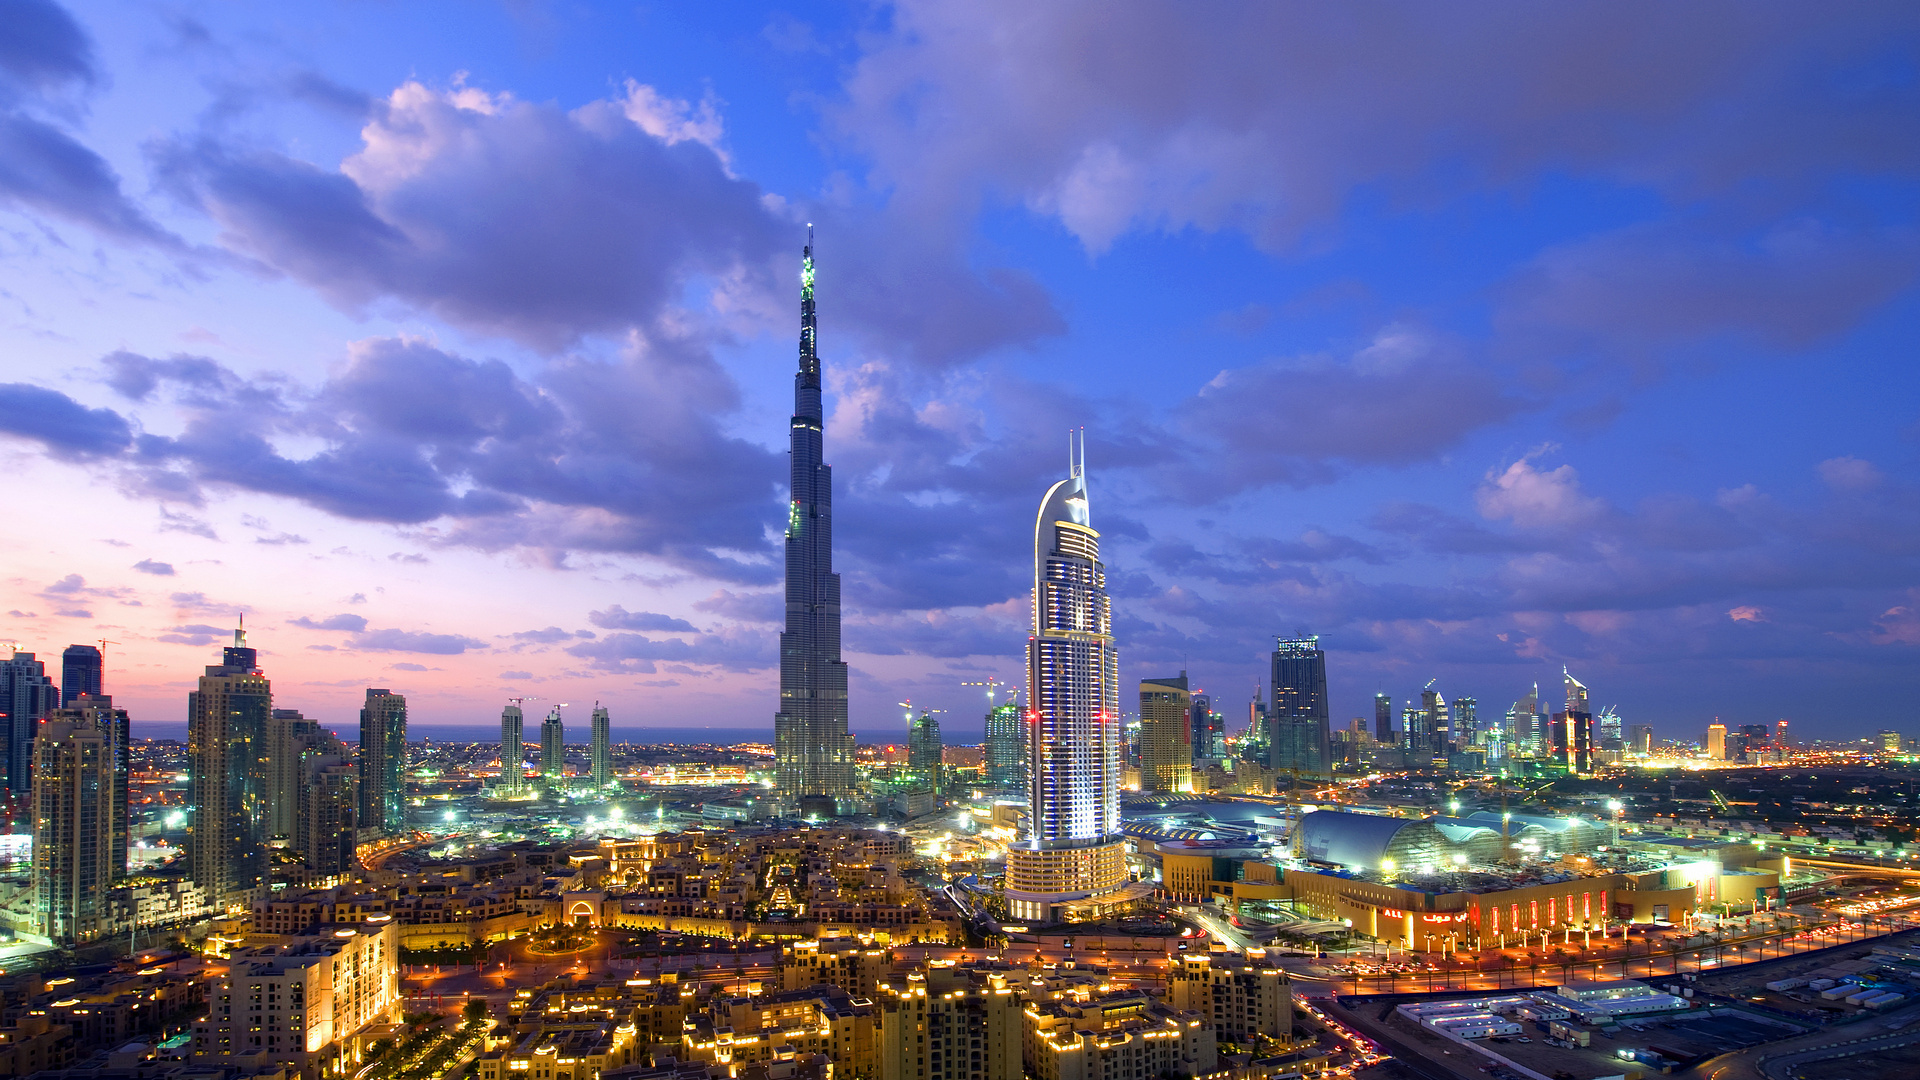 Burj-Khalifa-Dubai-Wallpapers-Pictures-Images.jpg